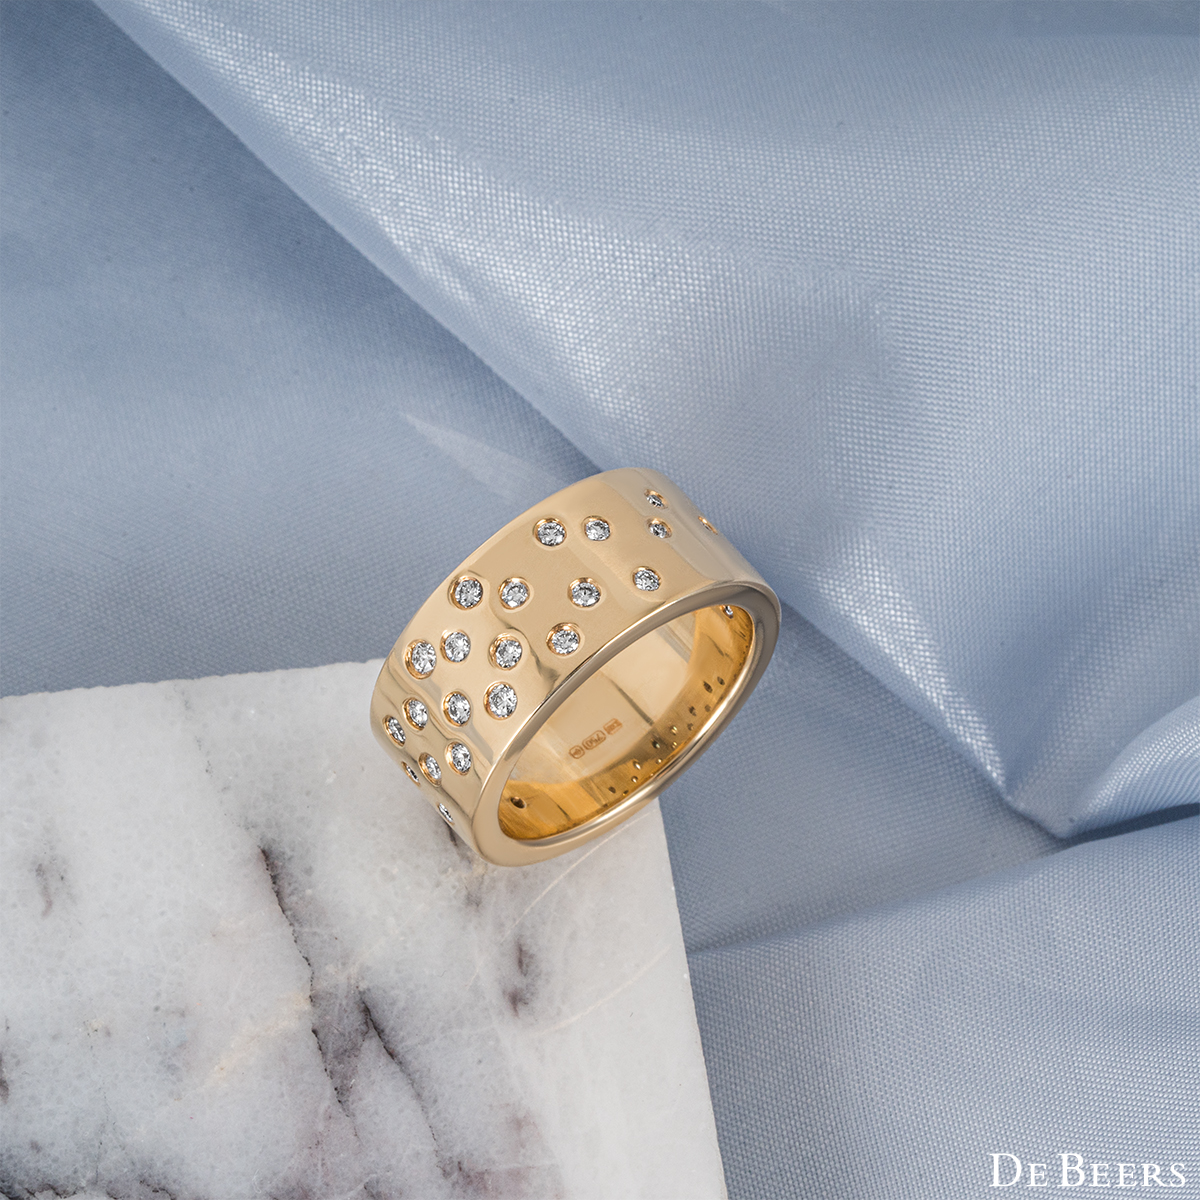 De Beers Yellow Gold Diamond Dress Ring